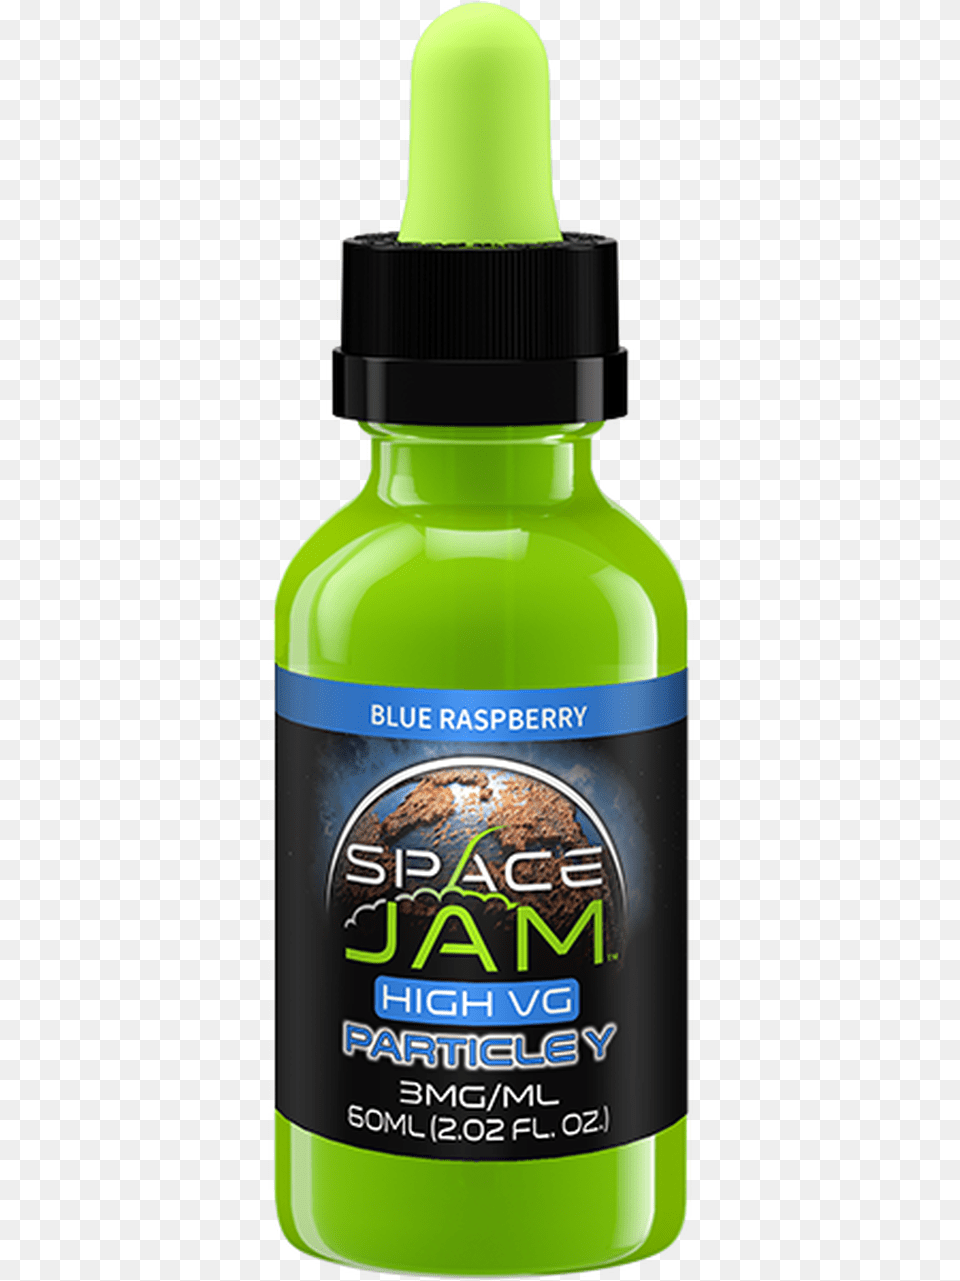 Particle Y Space Jam Vape Juice, Bottle, Cosmetics, Perfume Free Transparent Png